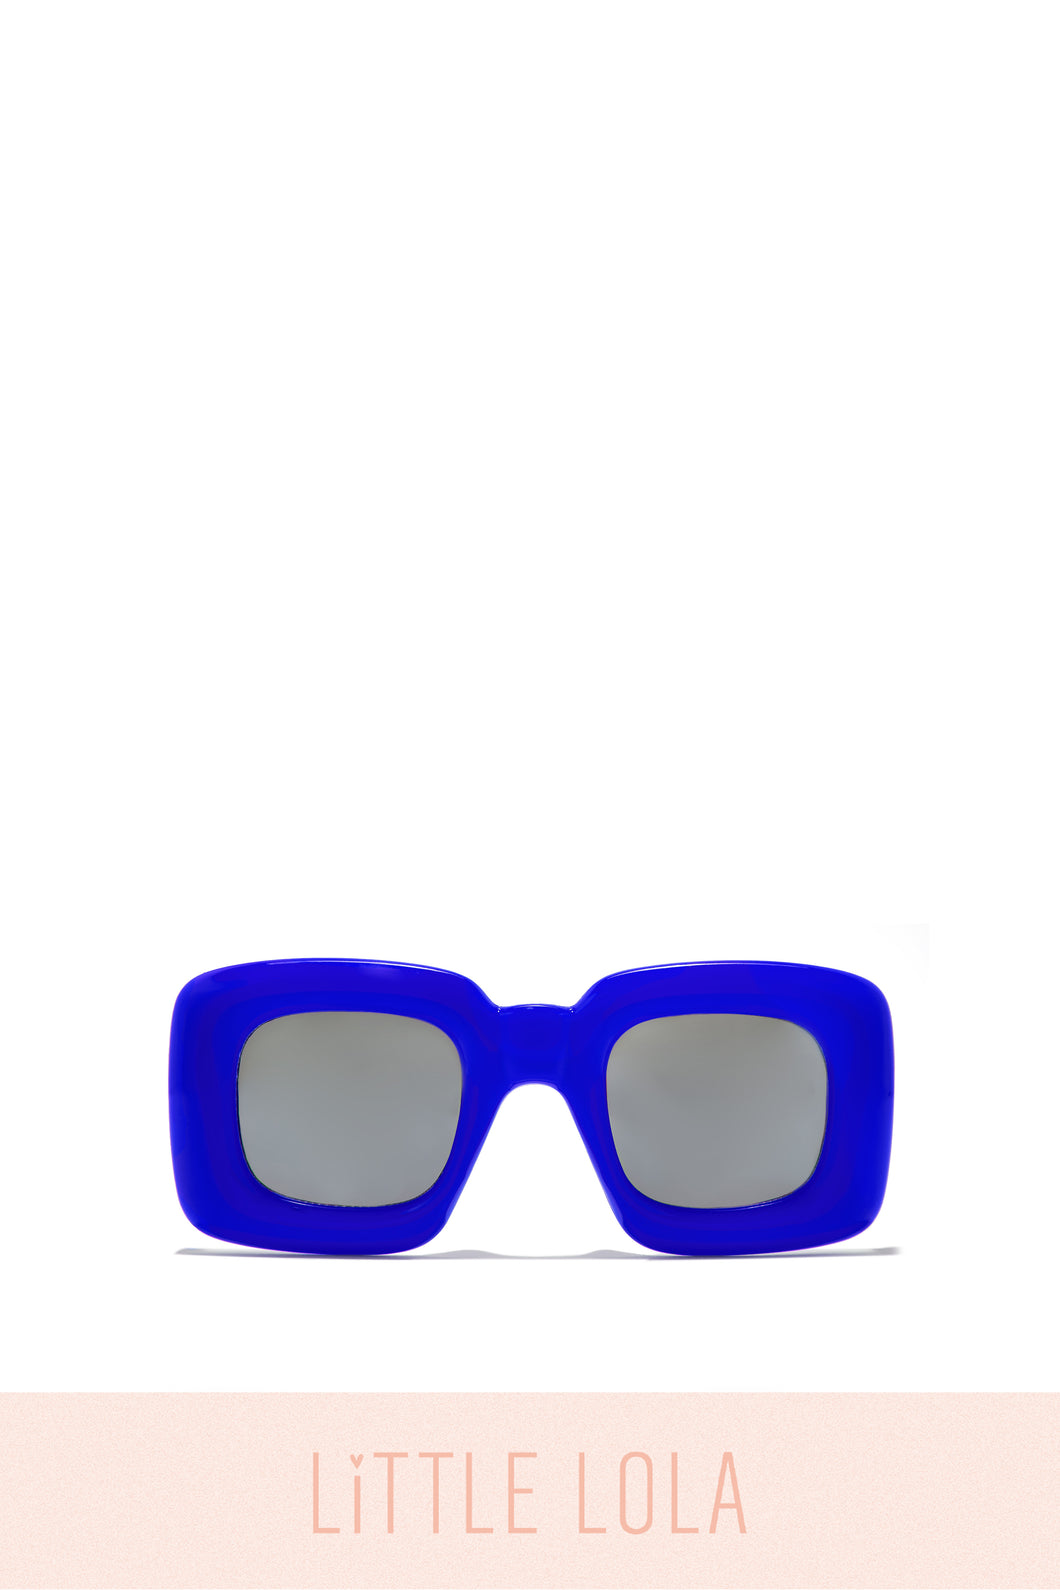 Kids Blue Sunglasses With Gray Lenses